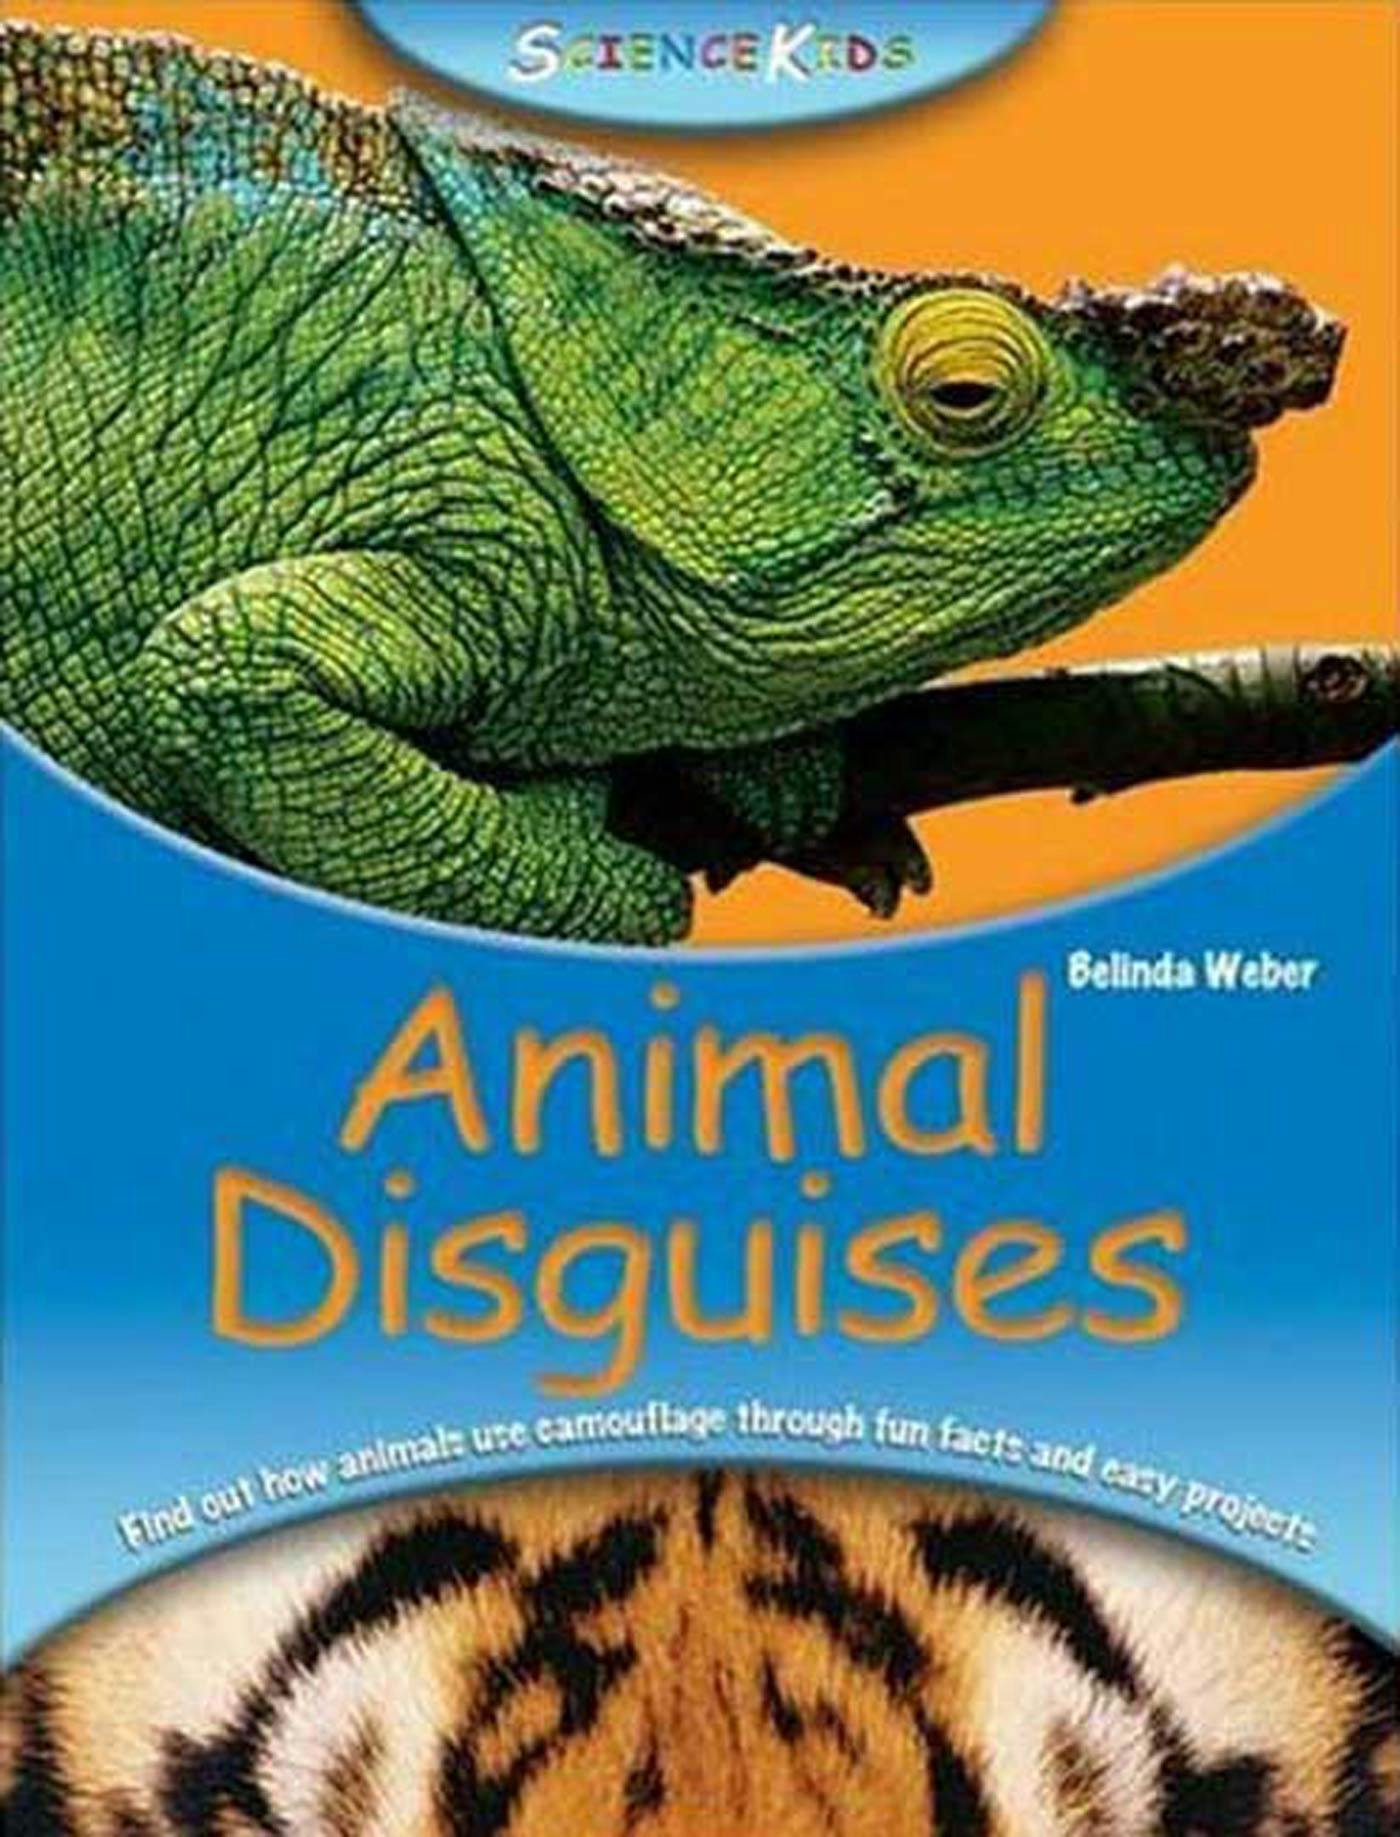 Science Kids Animal Disguises